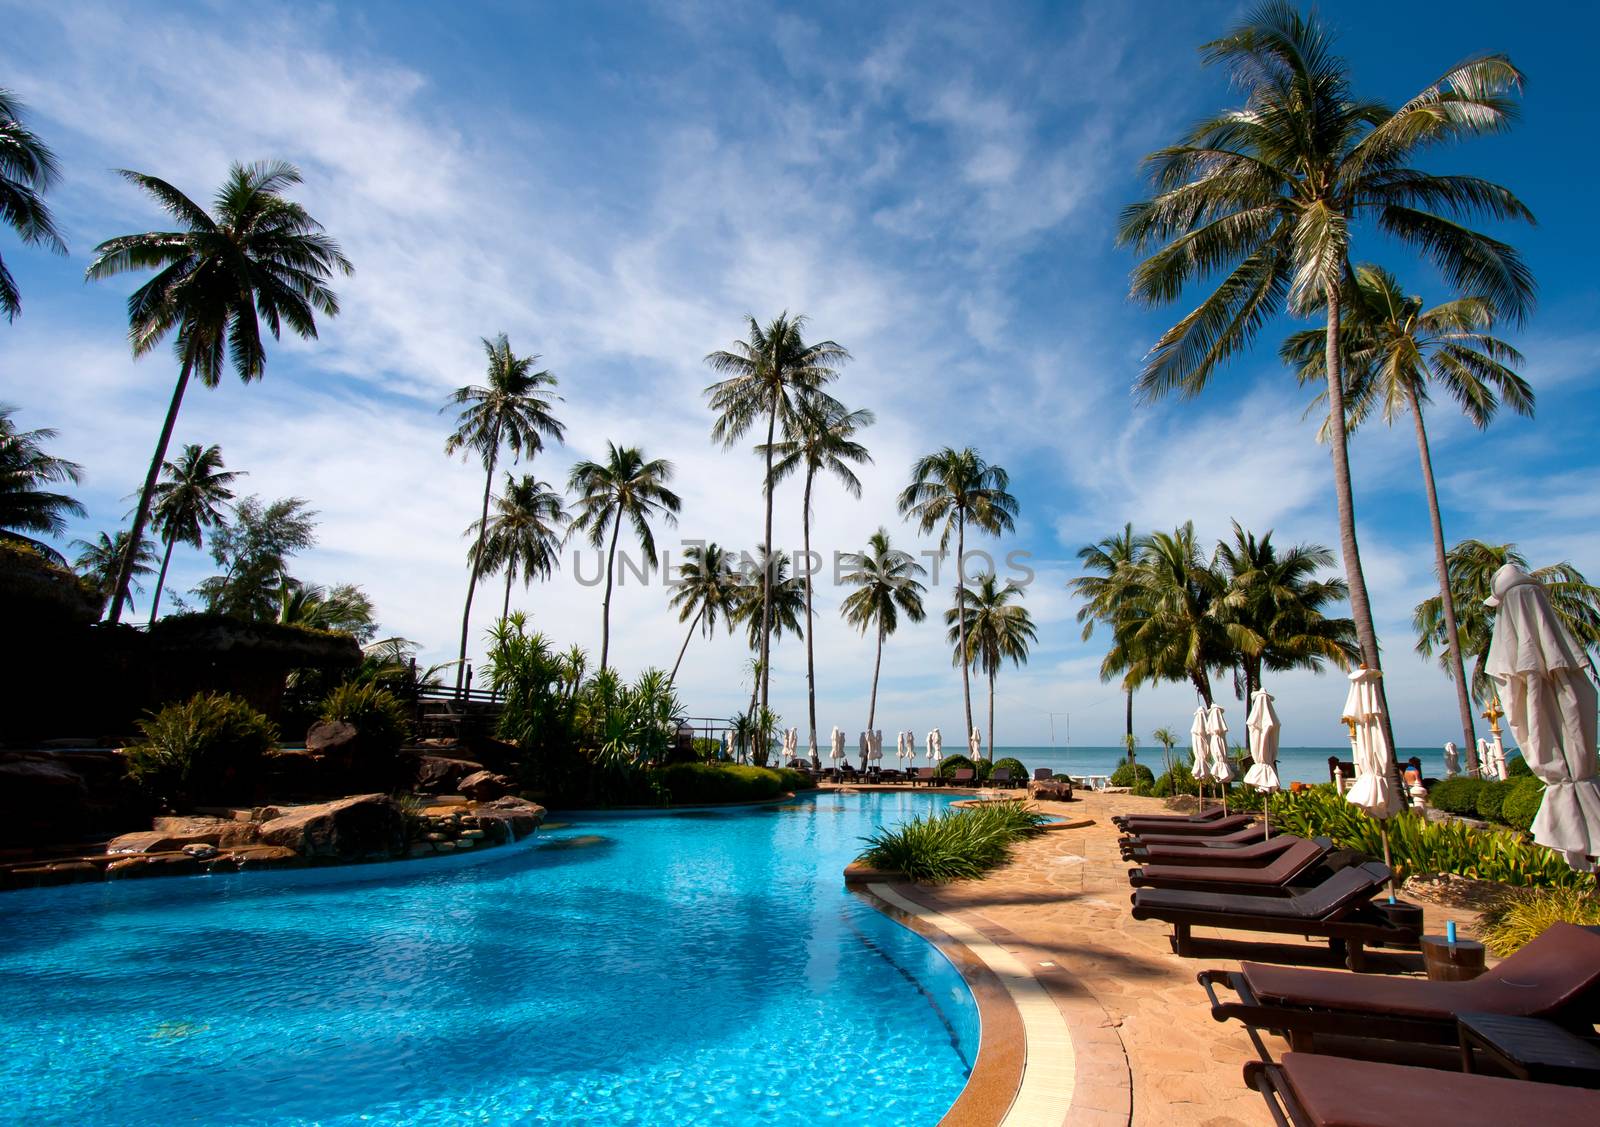 Deckchairs in tropical resort hotel pool